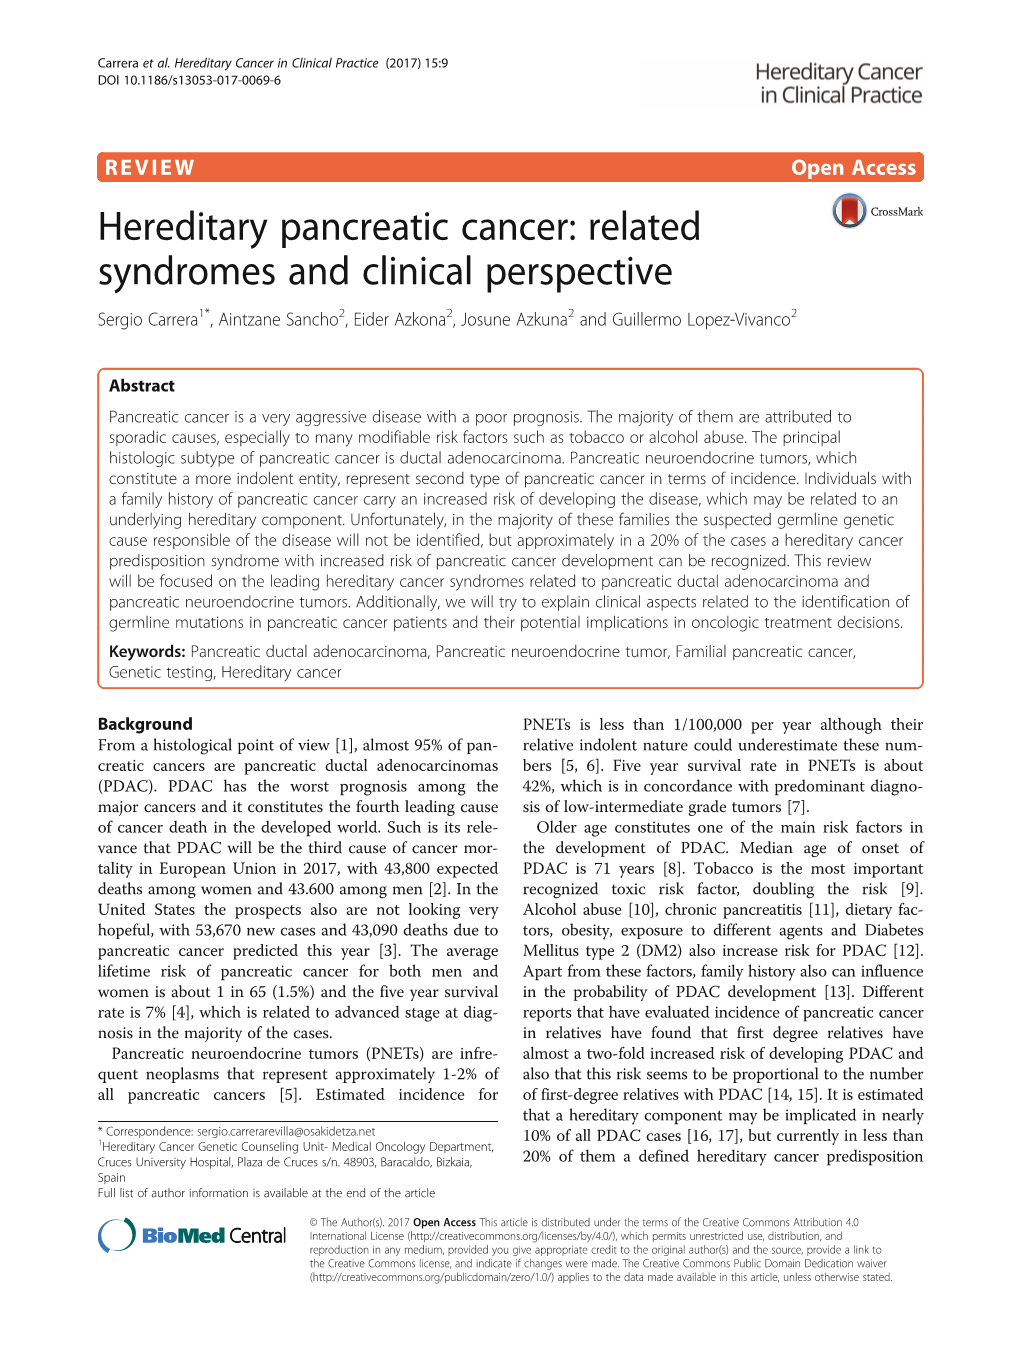 Hereditary Pancreatic Cancer